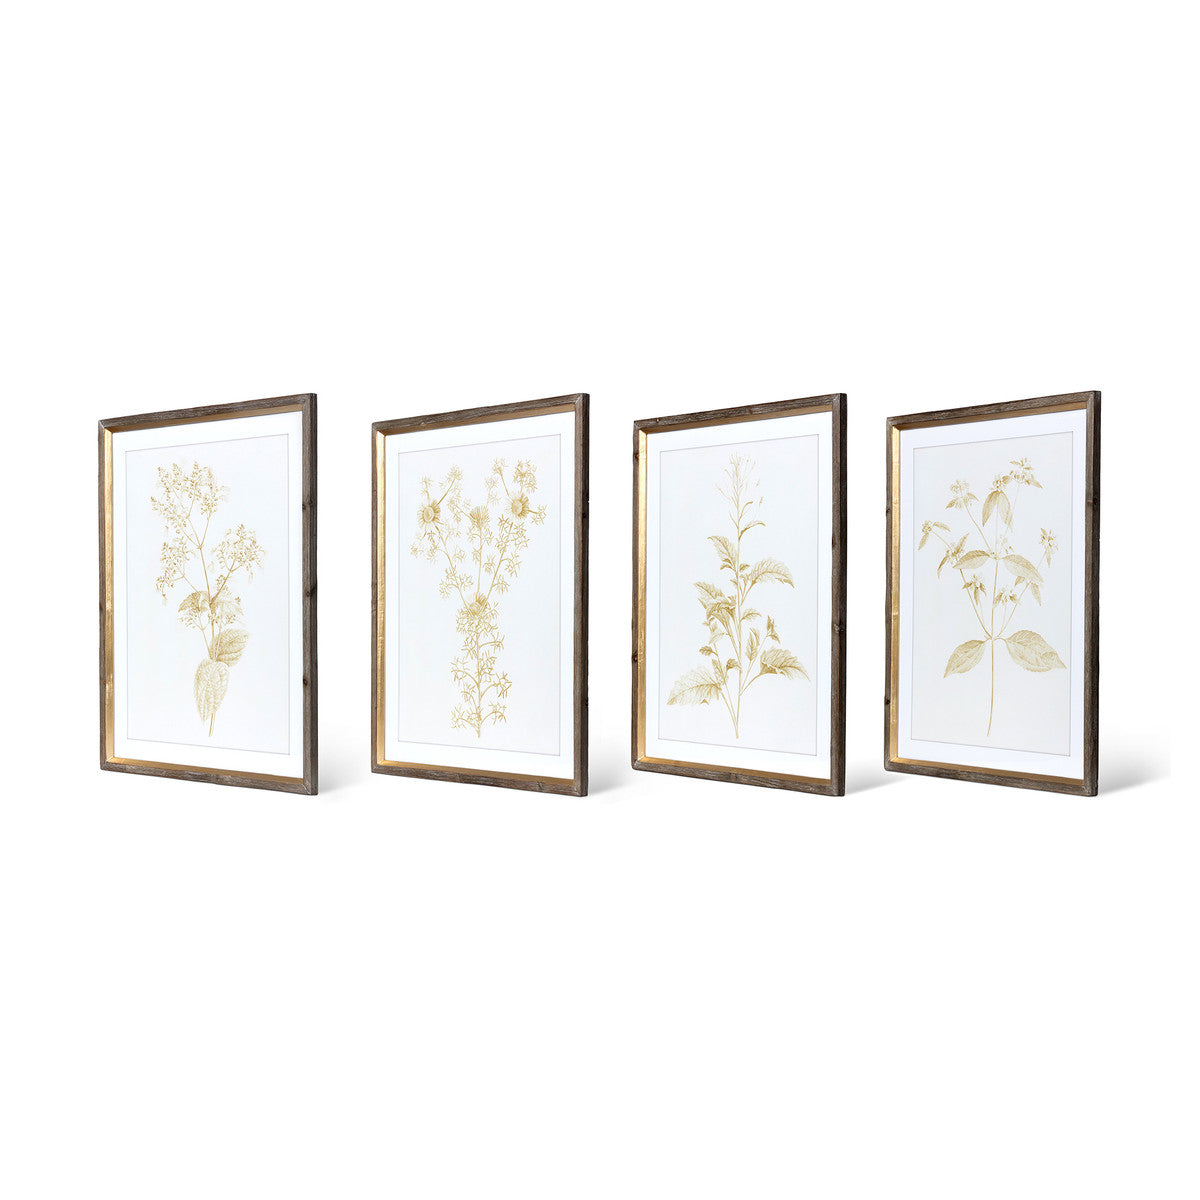 Sepia Botanical Framed Print, Set of 4